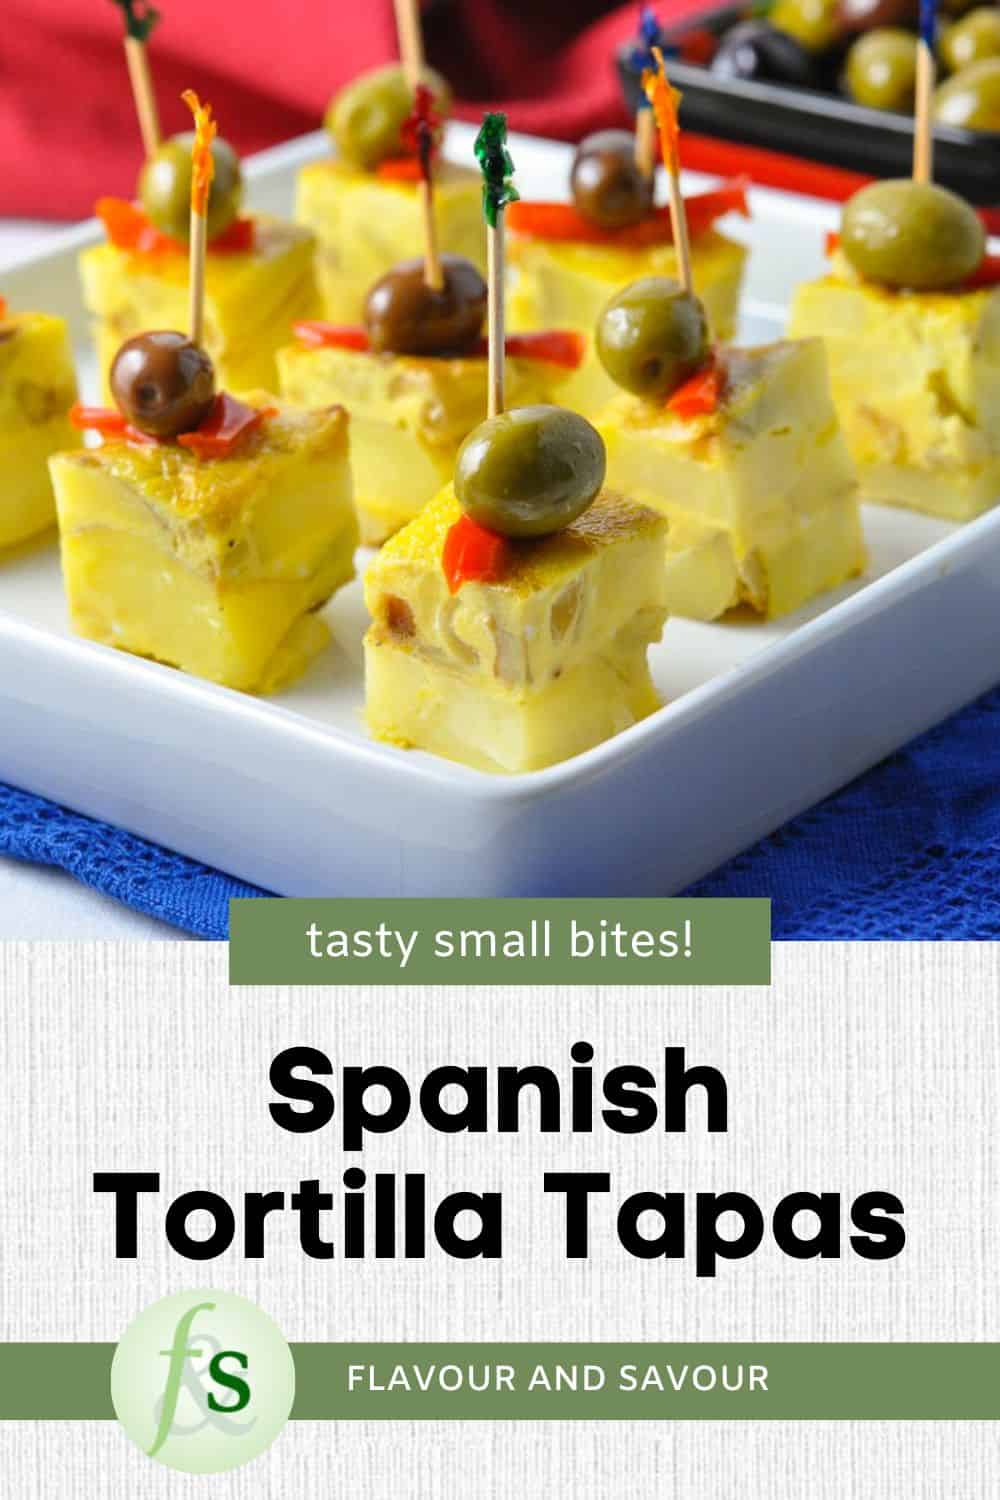 Image with text for tortilla española tapas.